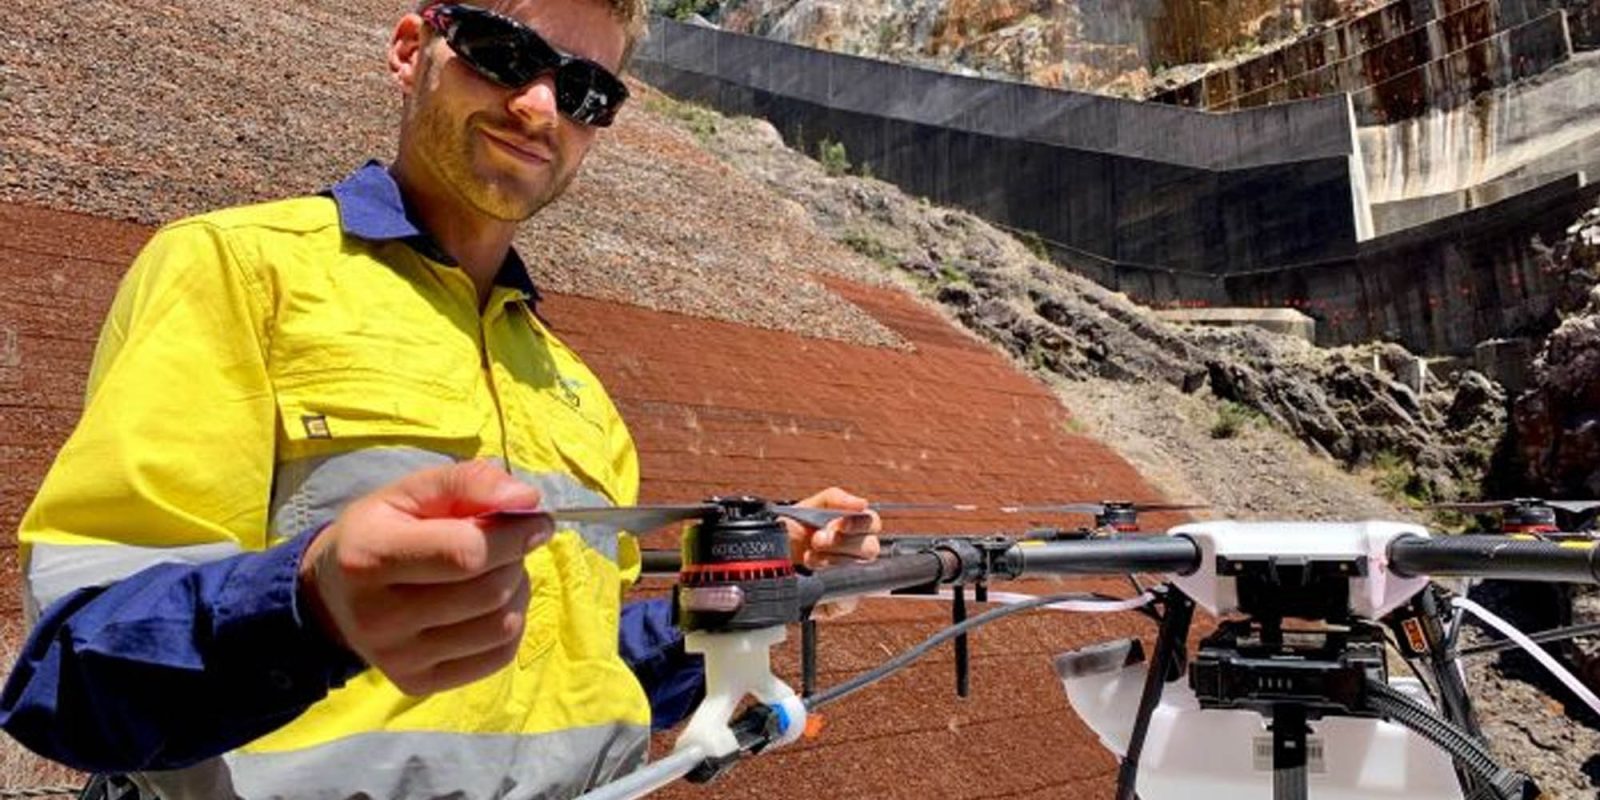 Drone pilot weeds Australia